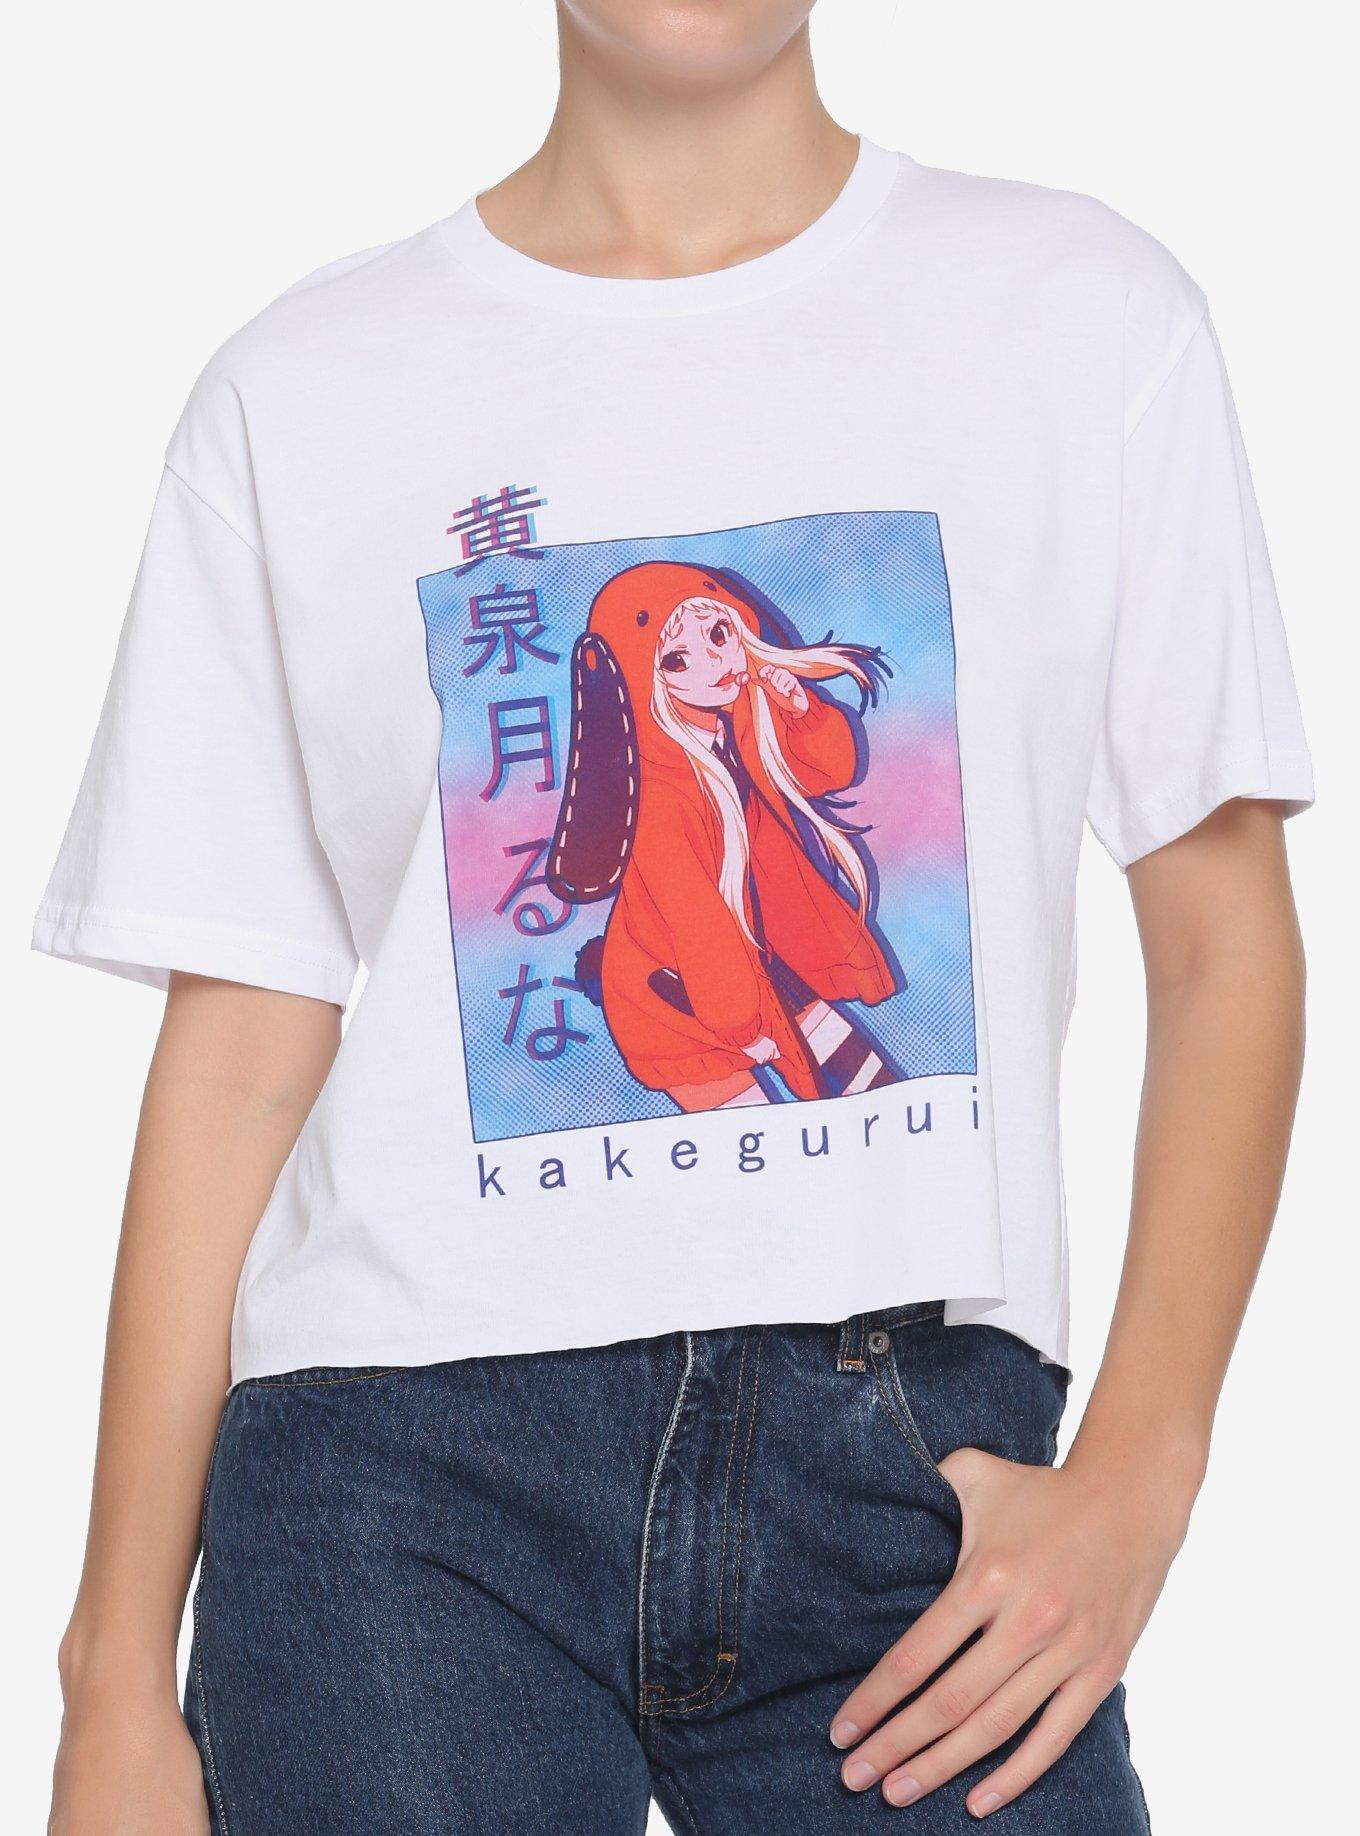 Kakegurui Yomozuki Boyfriend Fit Girls Crop T-Shirt, MULTI, hi-res